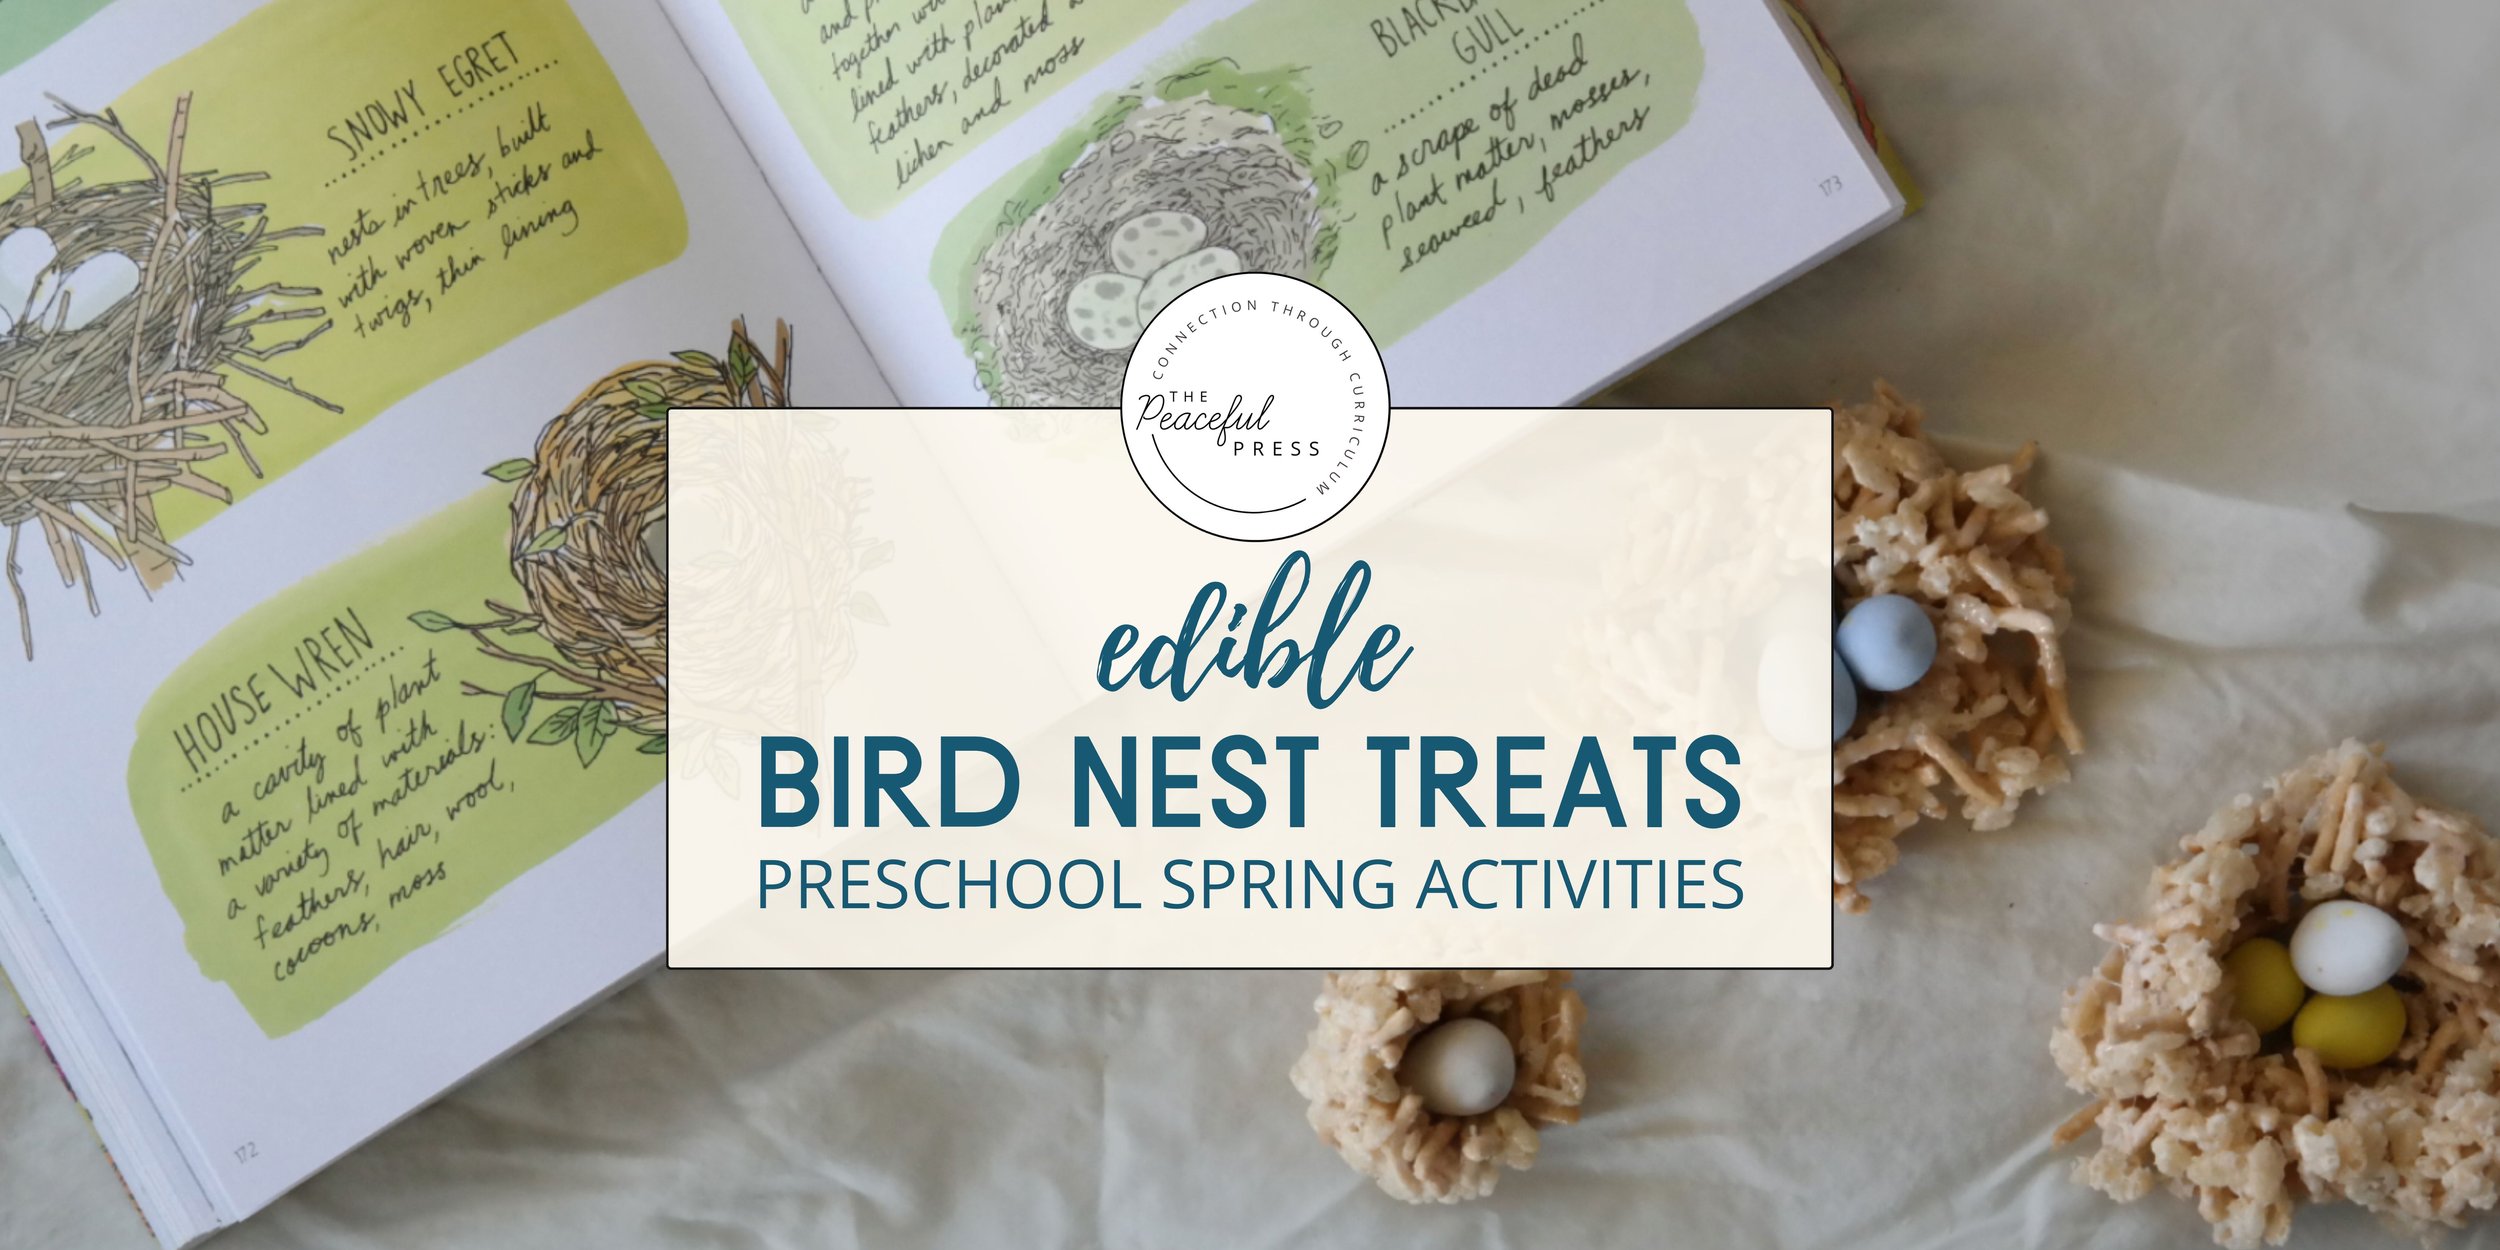 Edible Bird Nest Treats — THE PEACEFUL PRESS